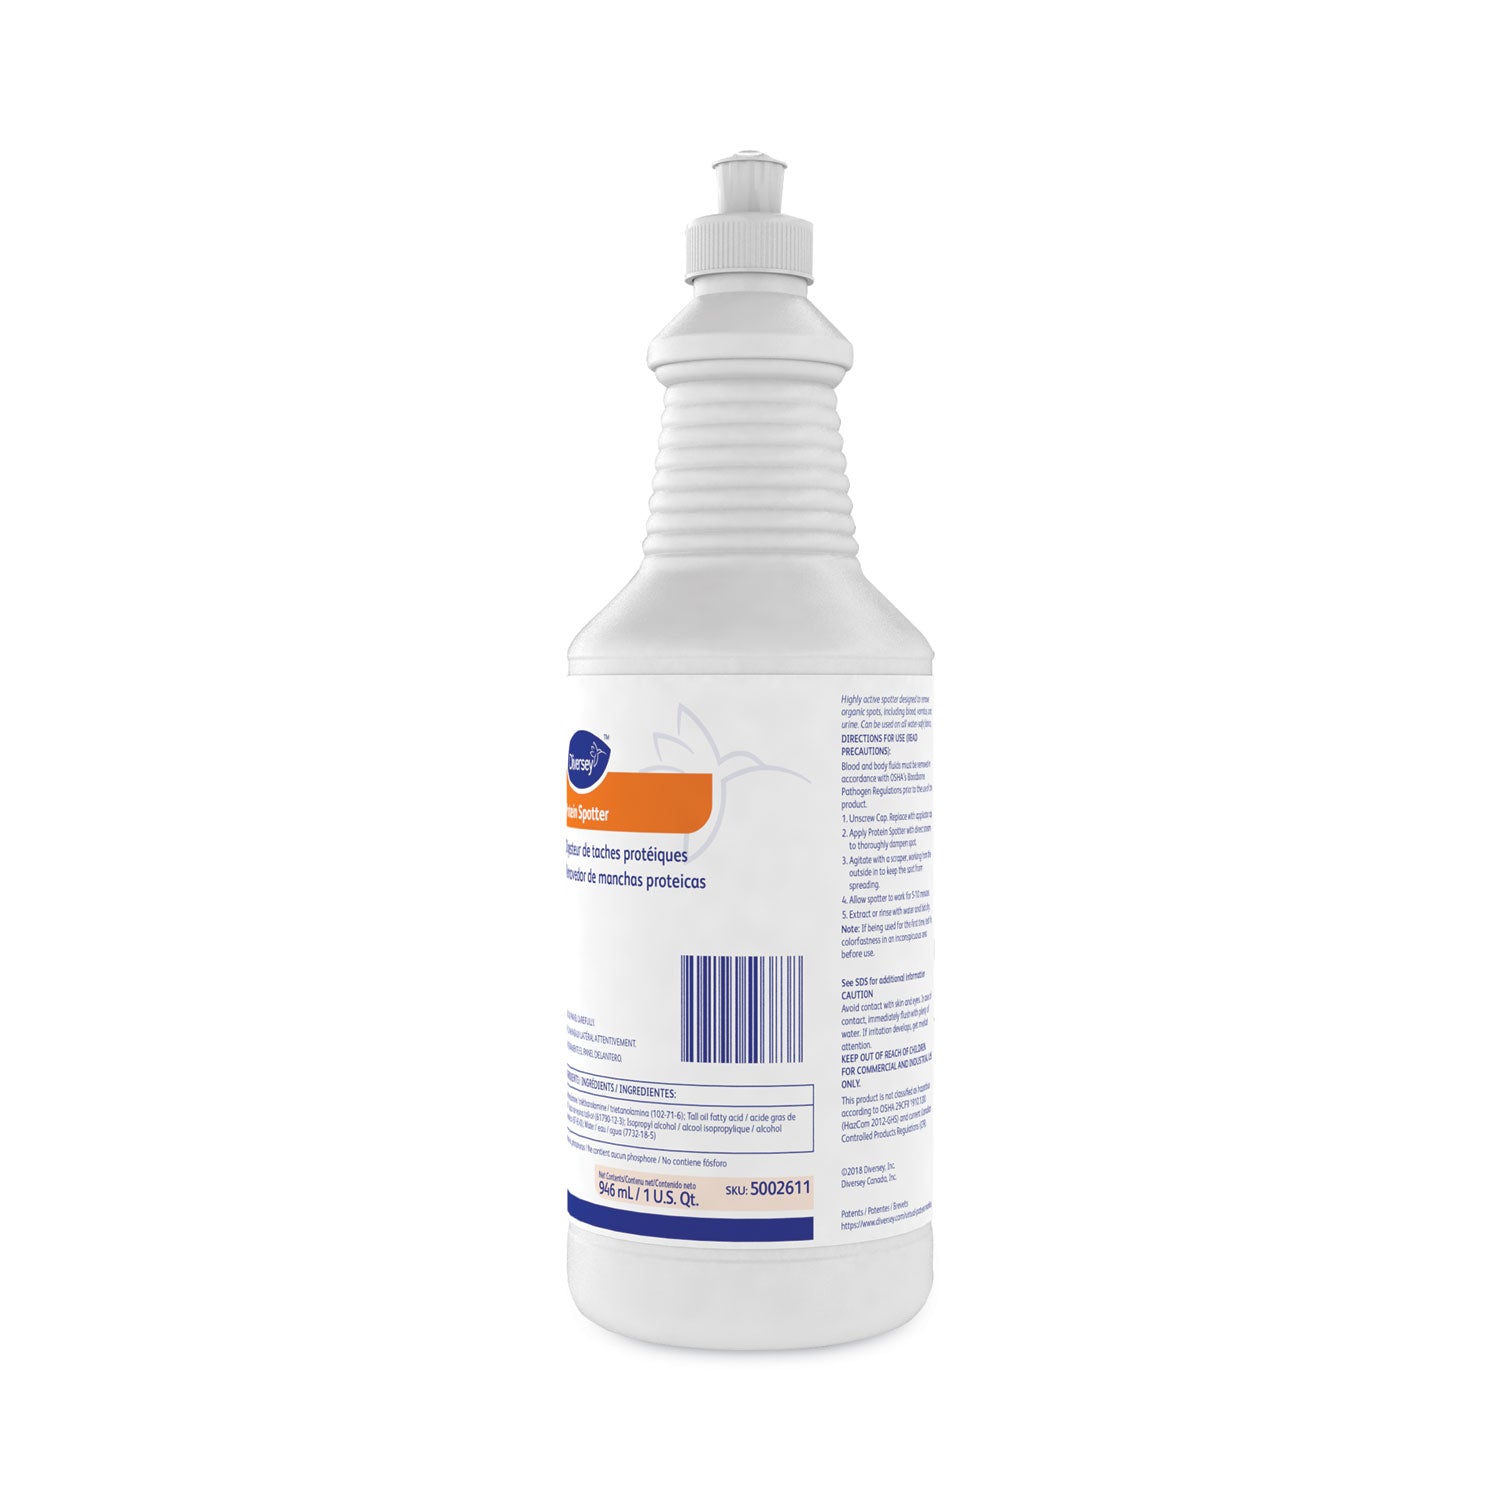 protein-spotter-fresh-scent-32-oz-bottle-6-carton_dvo5002611 - 4